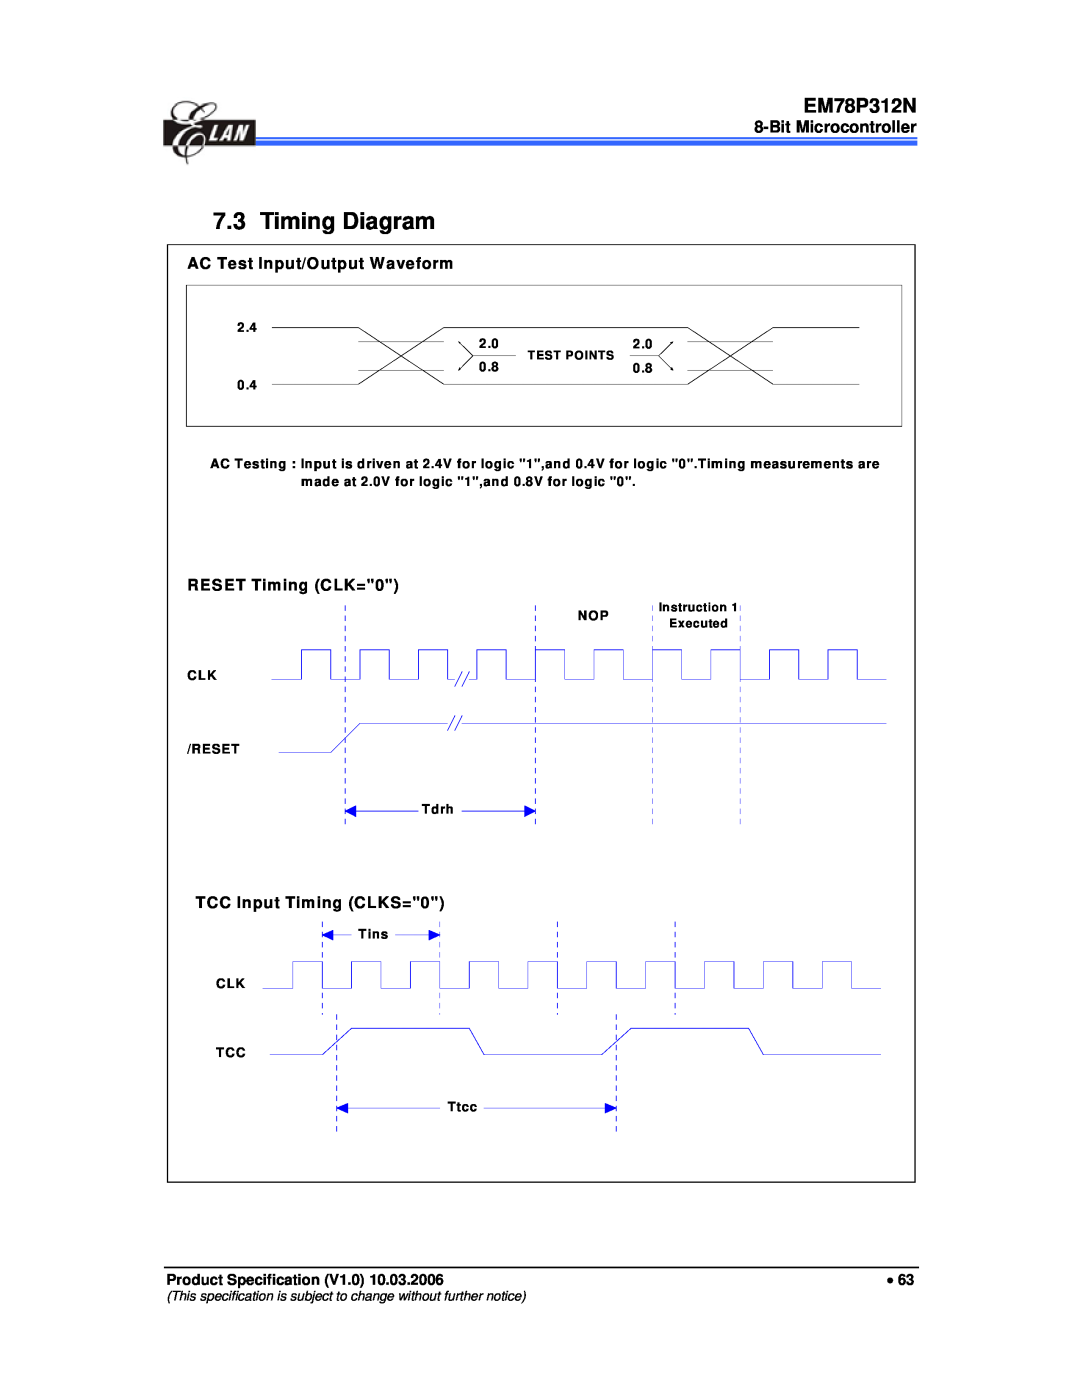 IBM EM78P312N manual Timing Diagram, Bit Microcontroller, AC Test Input/Output Waveform, RESET Timing CLK=0 